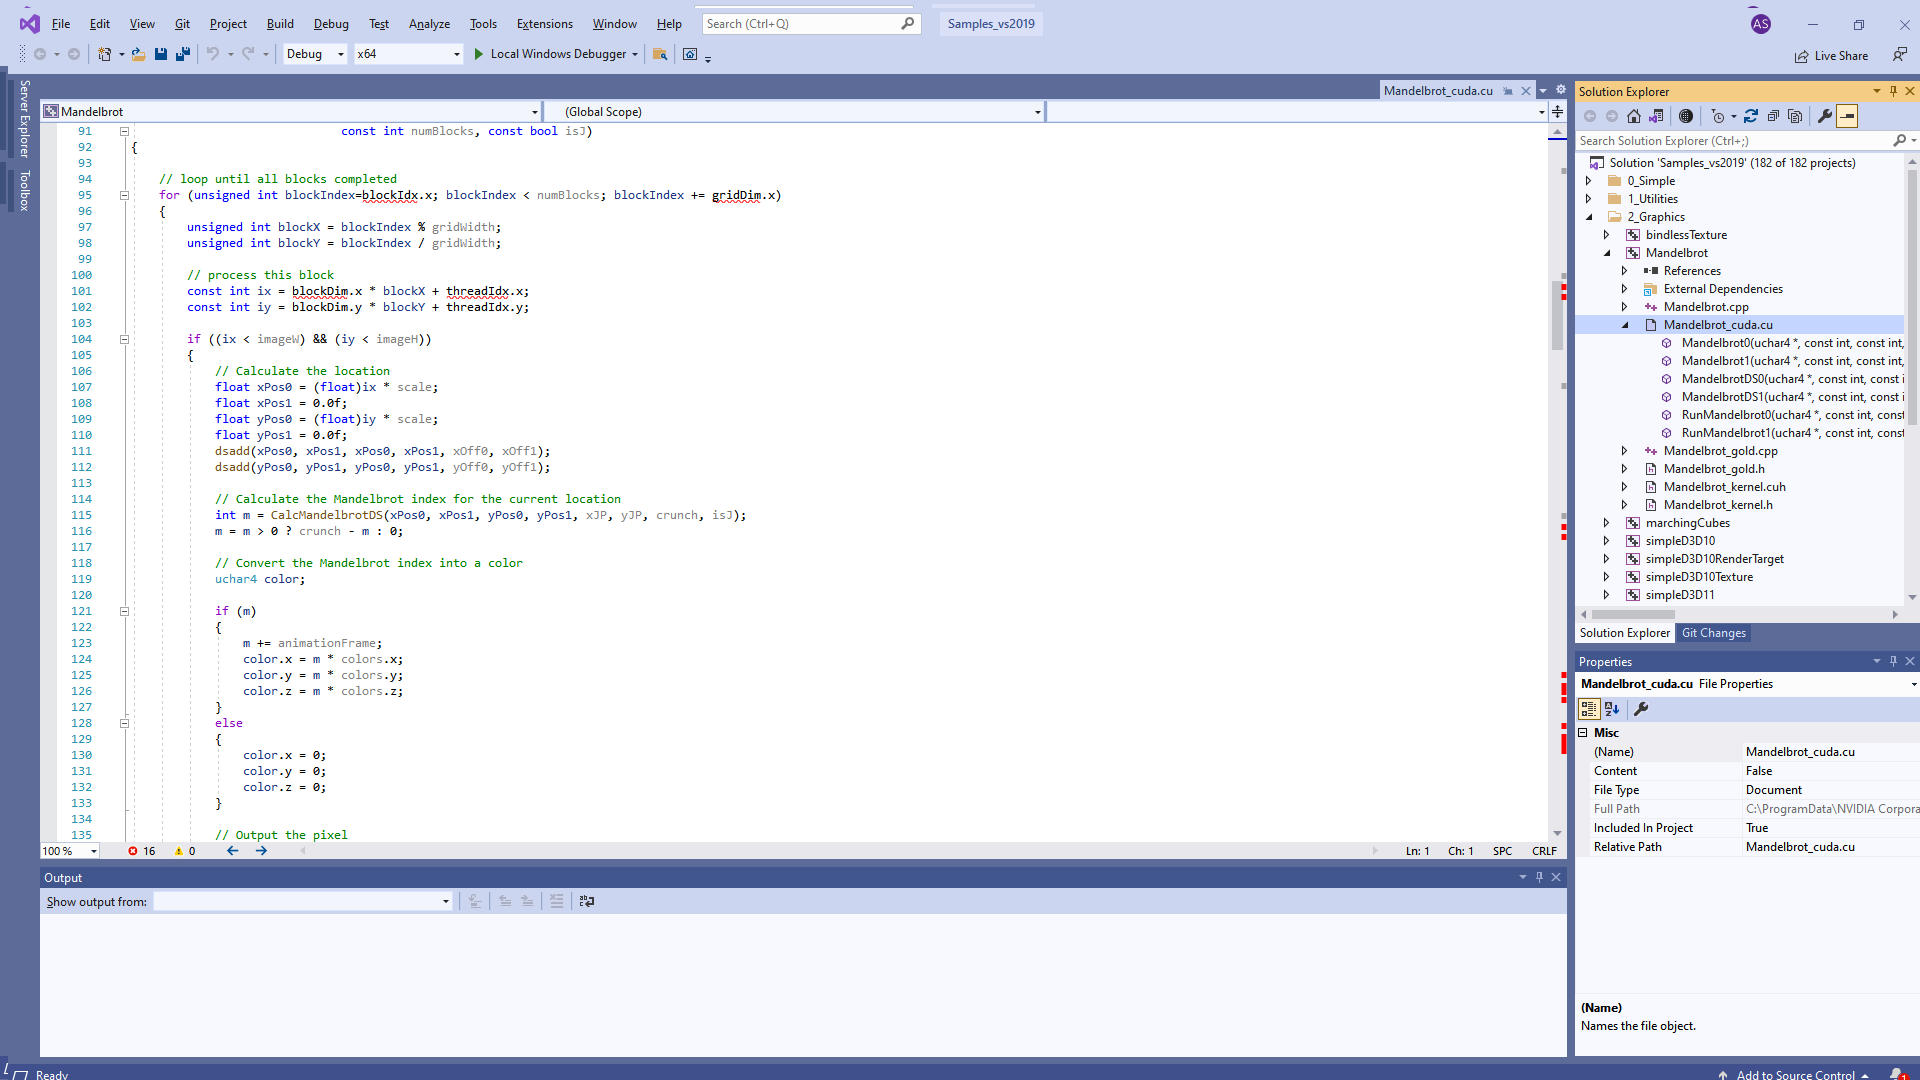 Microsoft Visual Studio Community Edition - Softwareontwikkelomgeving